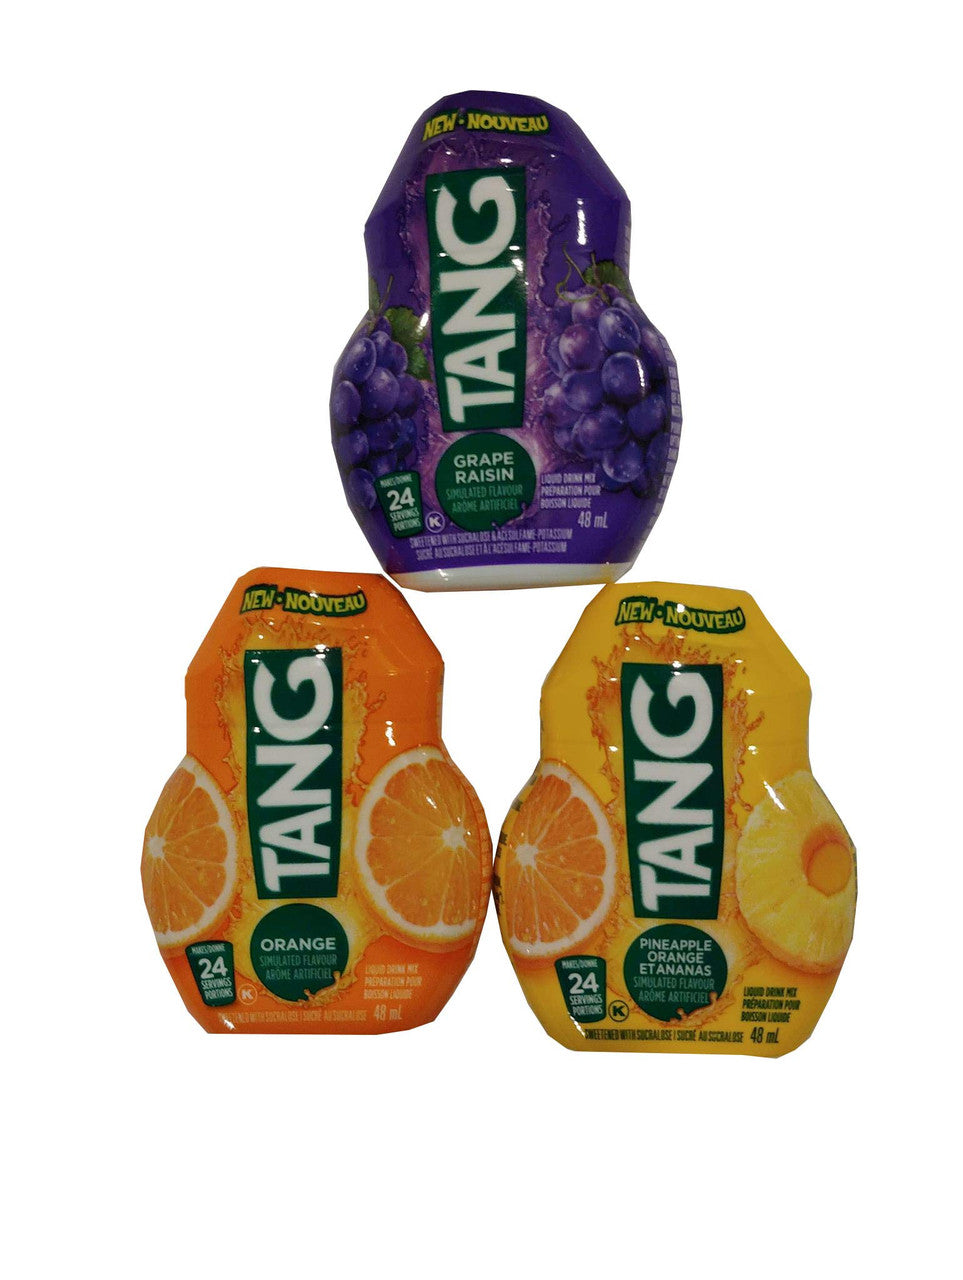 Tang Liquid Water Enhancer/Flavoring/ Drink Mix Bundle: Orange, Pineapple Orange & Grape, 48mL (1 of Each Flavor, 48mLx3) - Each Bottle Makes 24 Servings